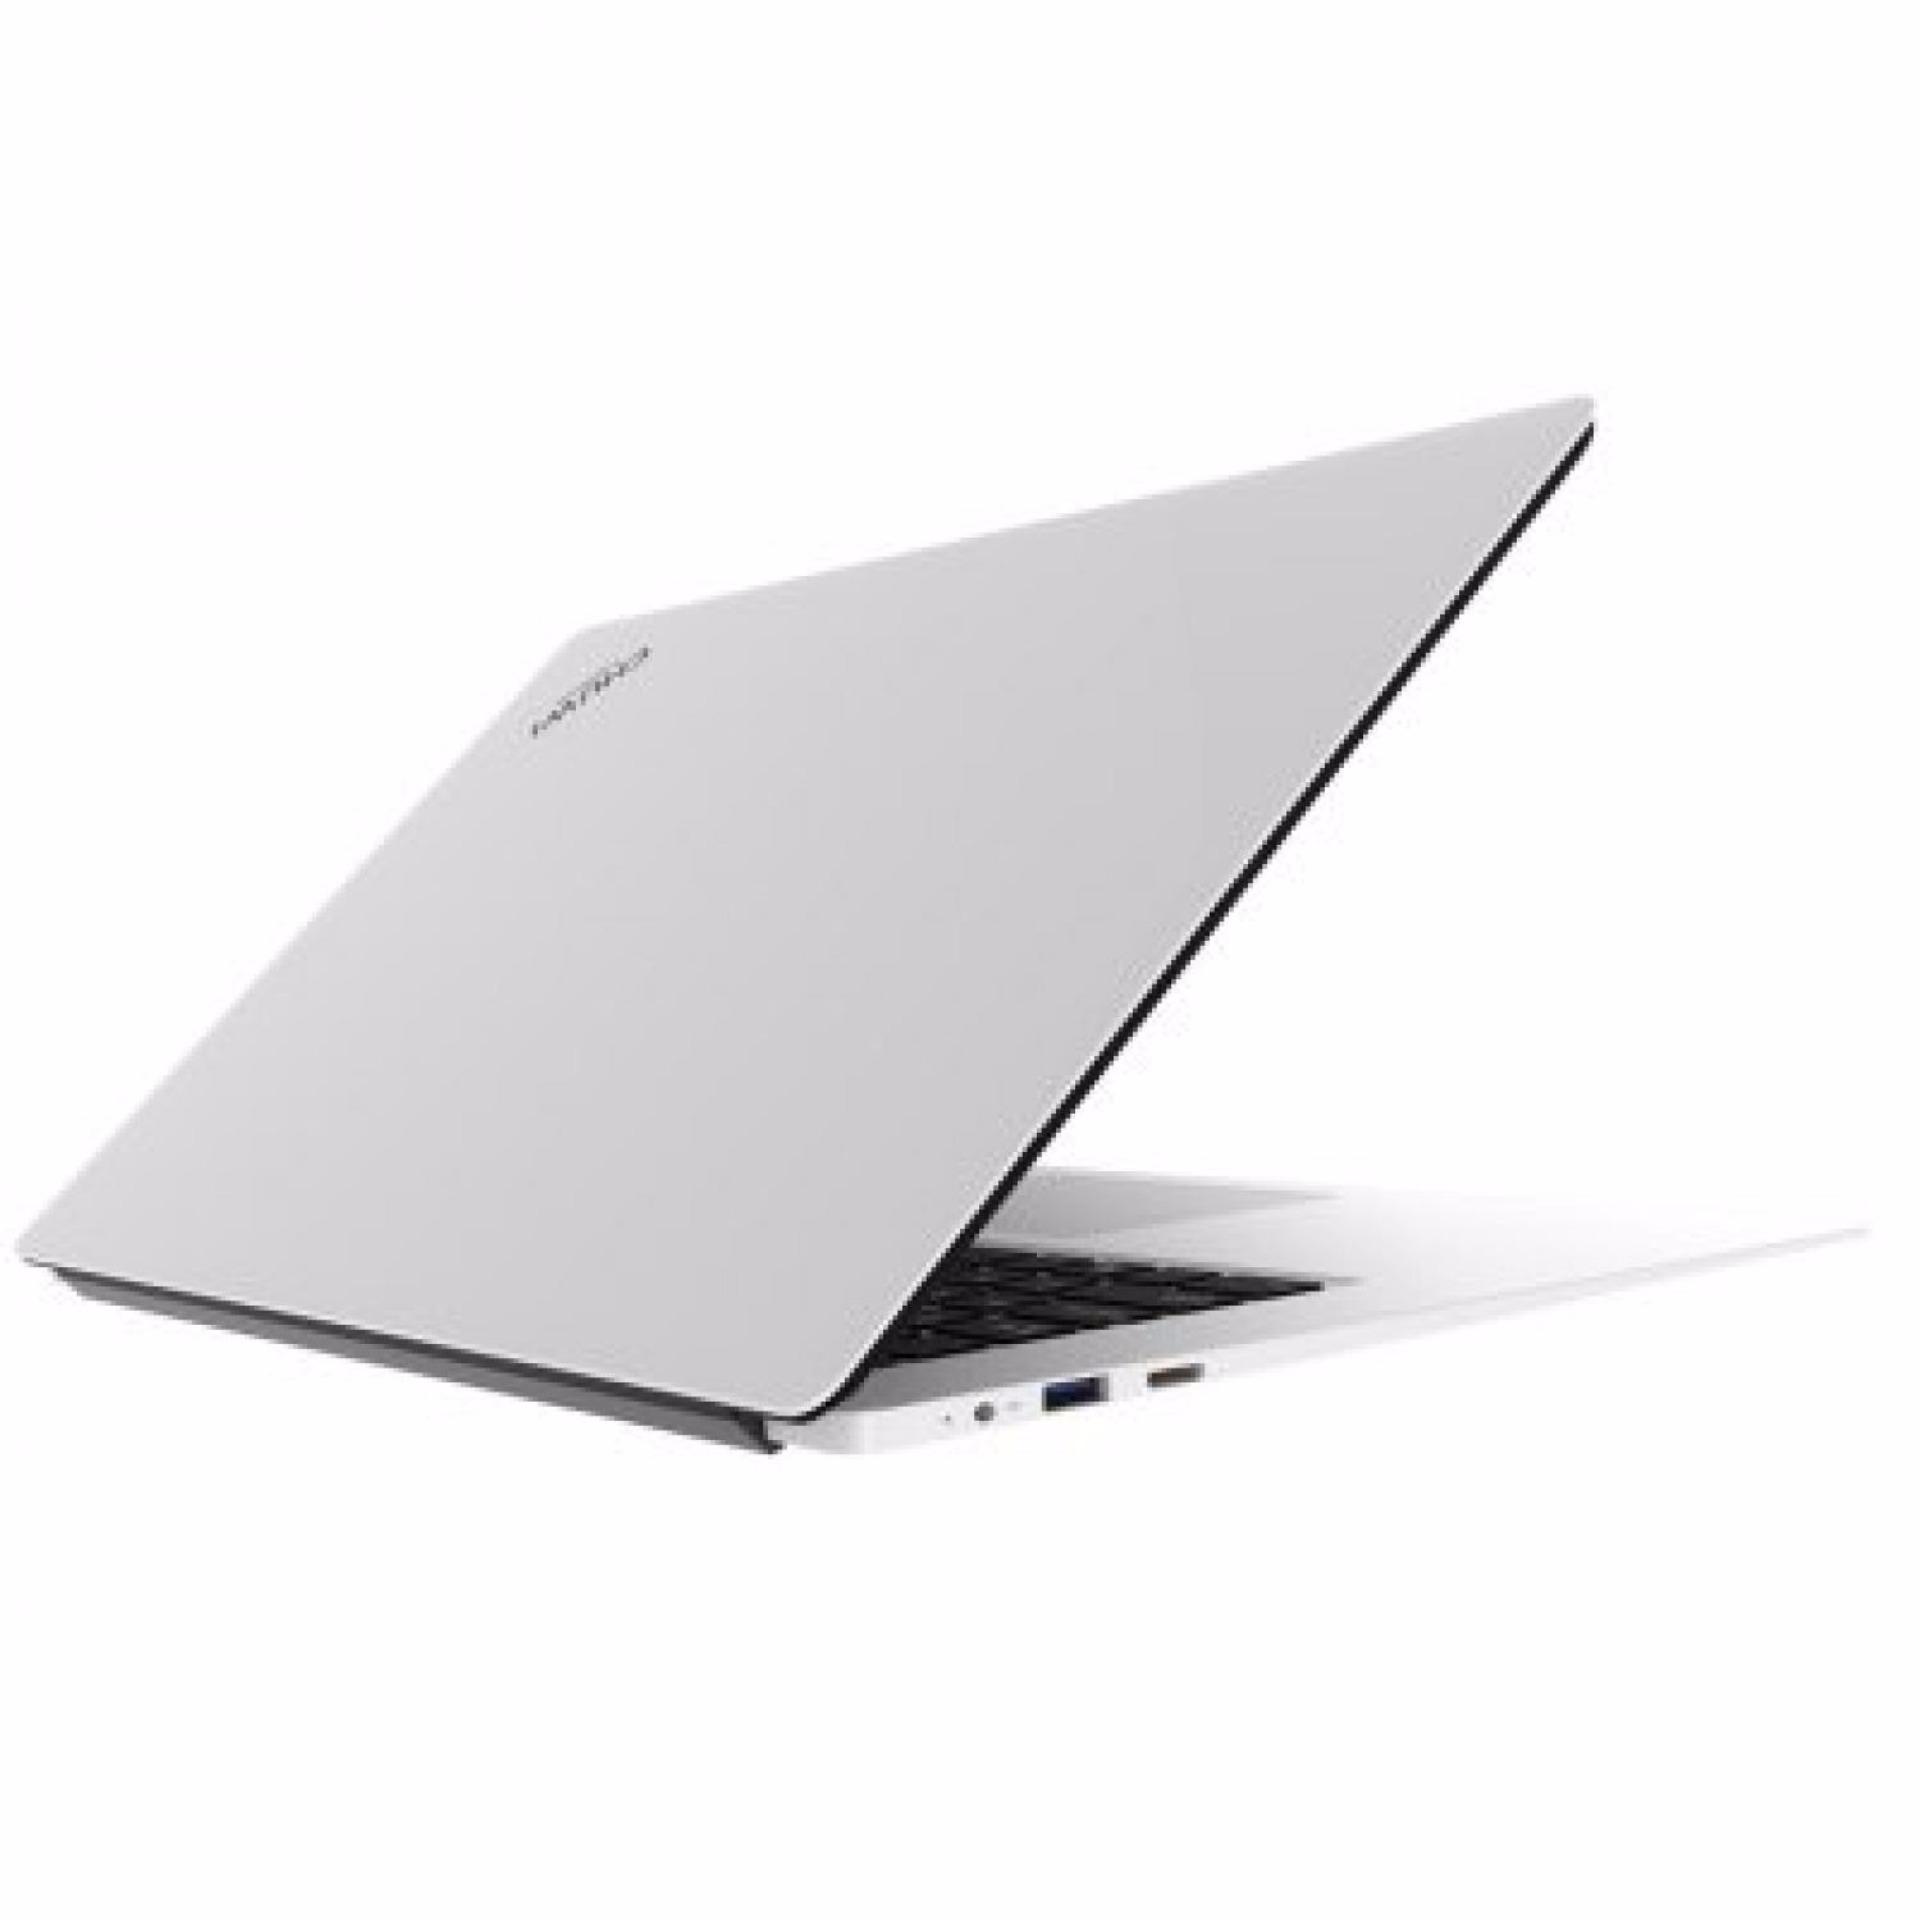 Chuwi LapBook Laptop Intel Z8350 4GB 64GB 15.6 Inch Windows 10